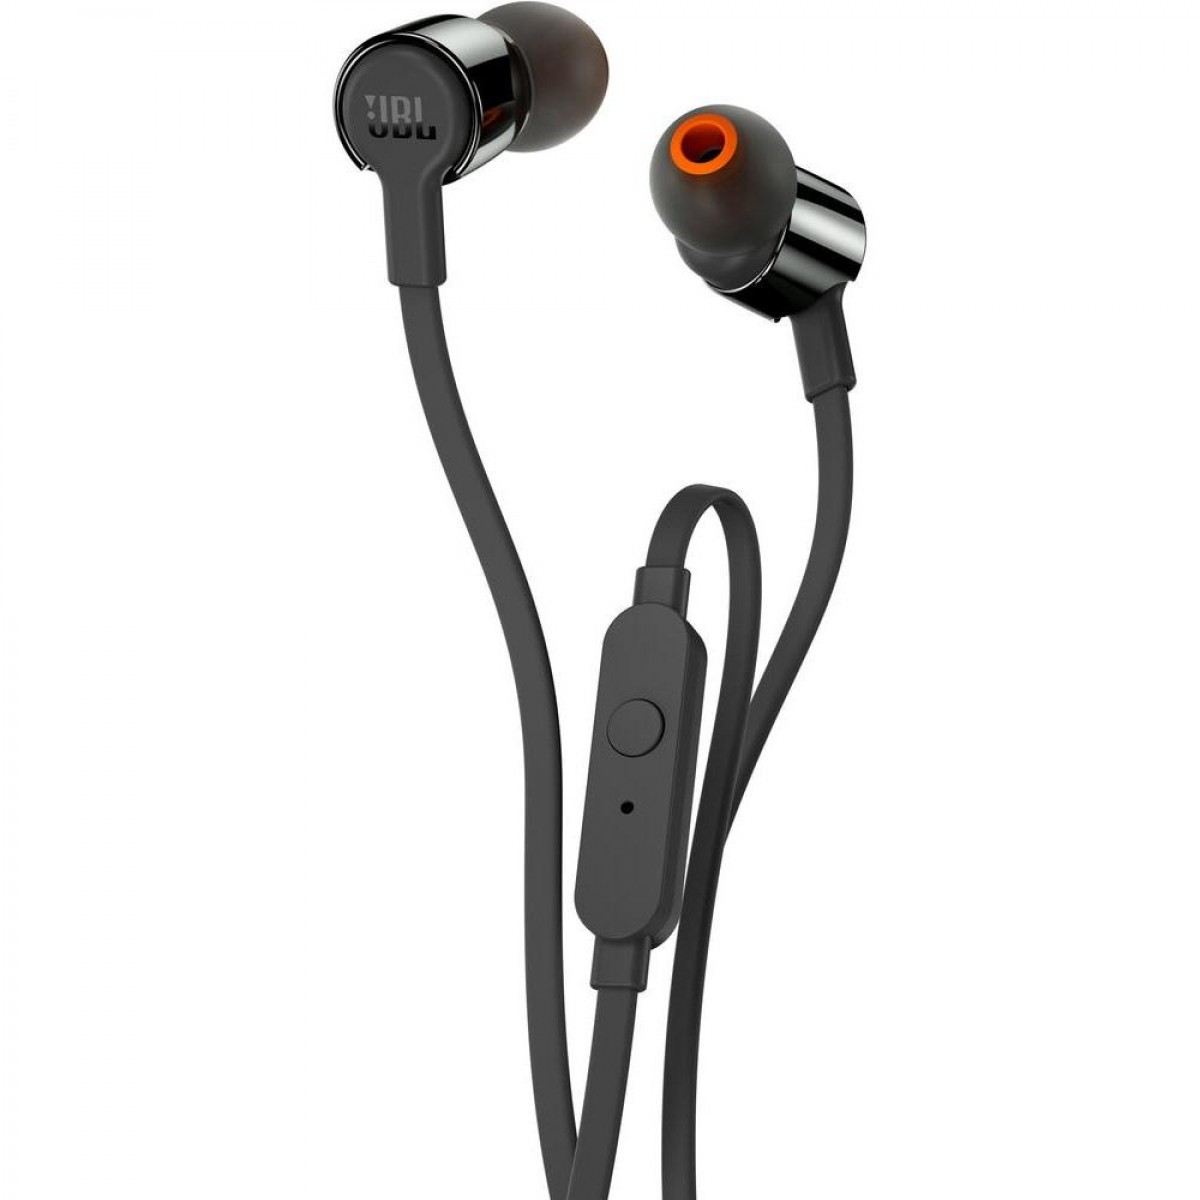 JBL Tune110 In-Ear Headphones with Mic